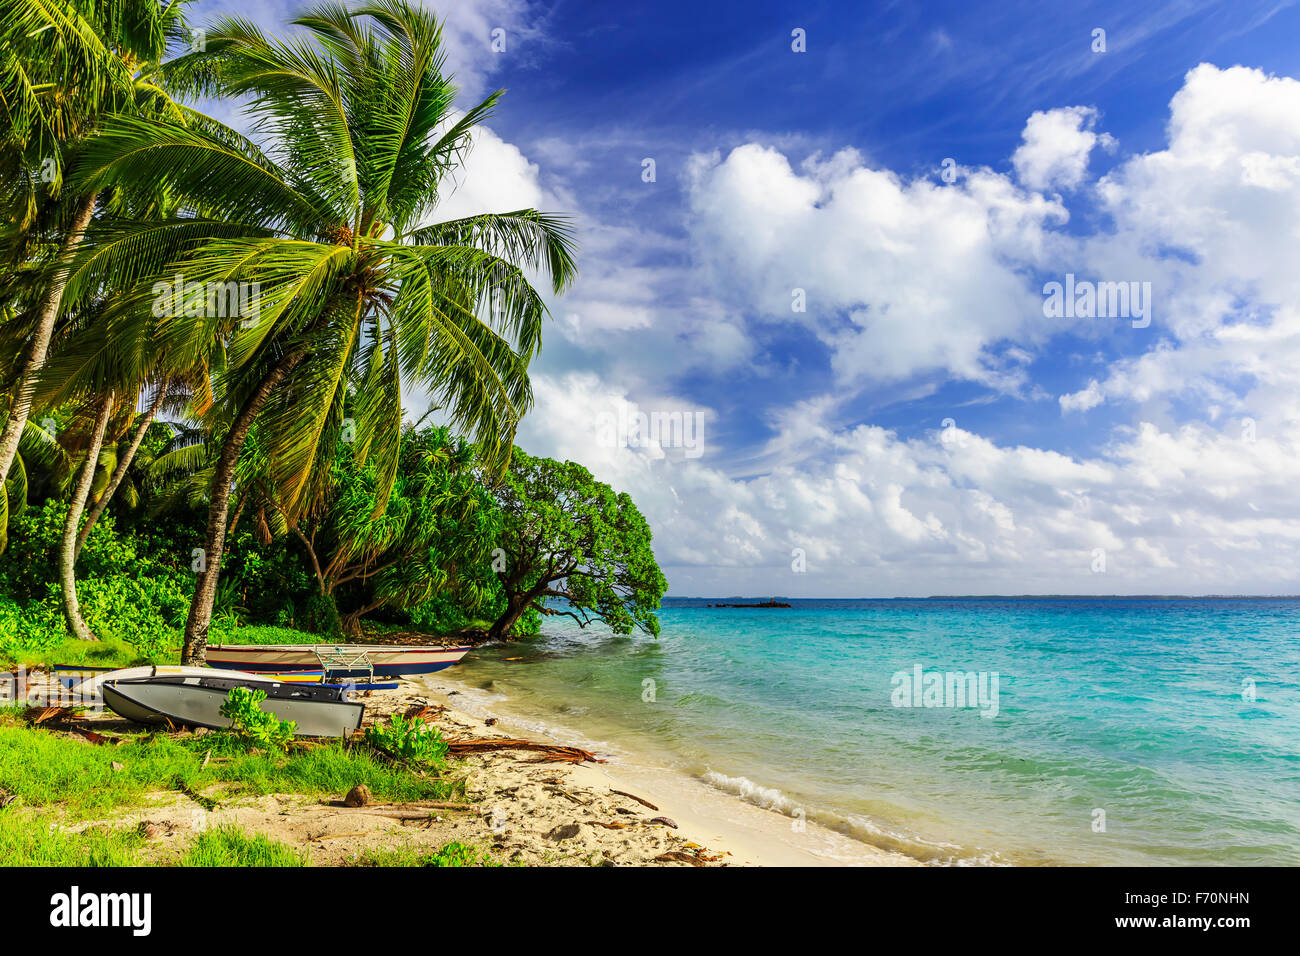 Tabuaeran beach sull'isola Fanning, Repubblica di Kiribati Foto Stock